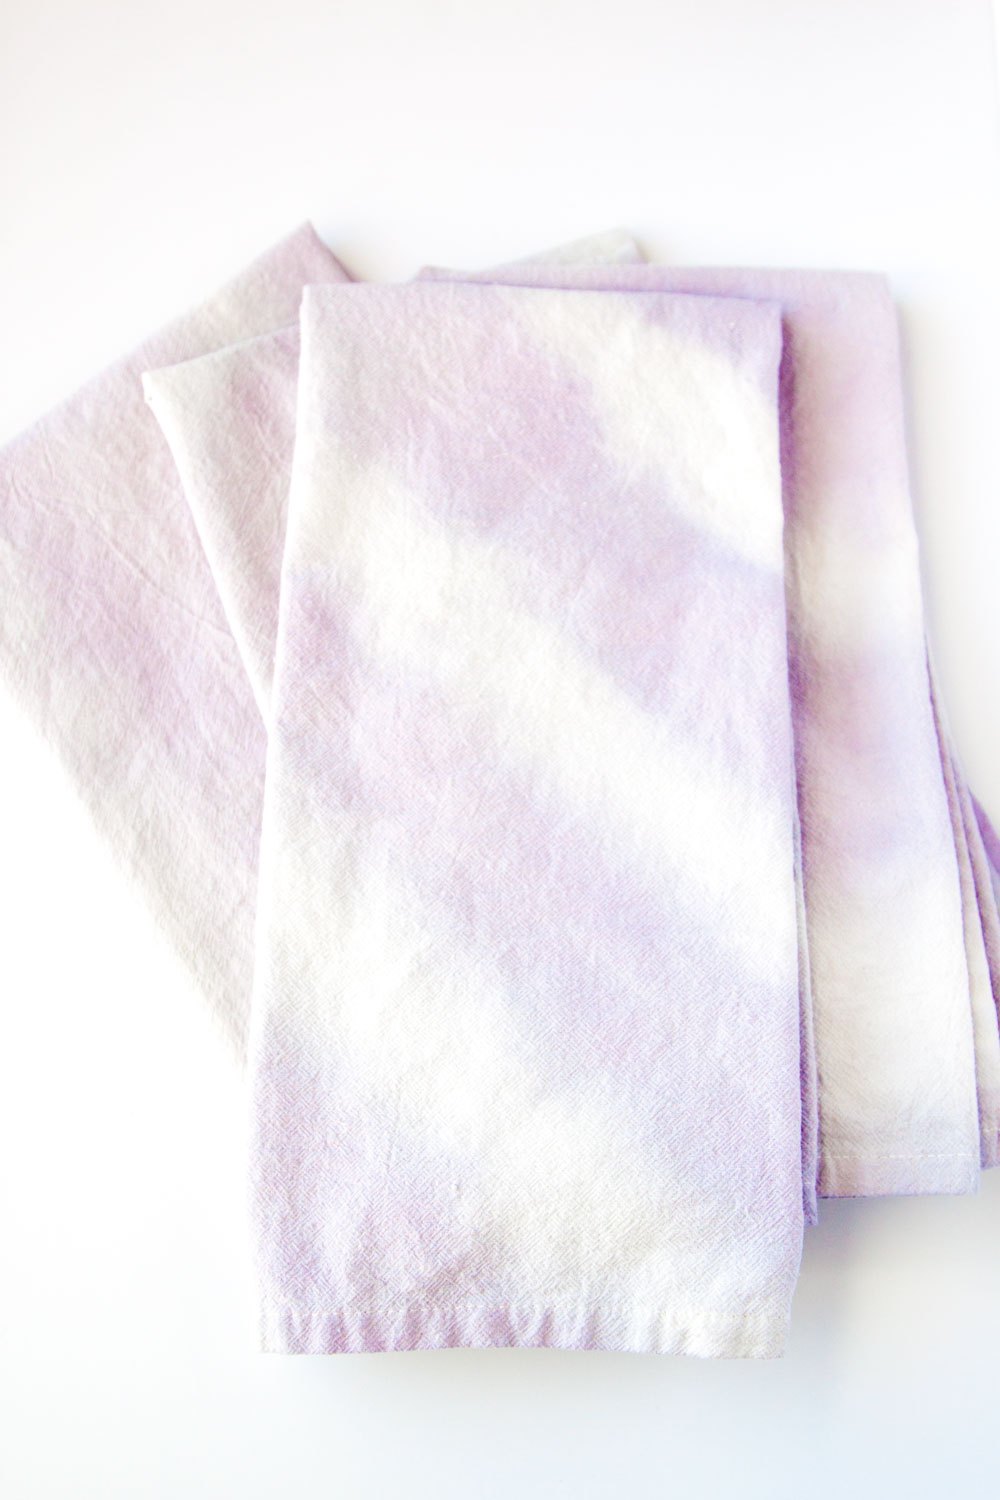 DIY natural dip dye spring napkins (via www.thesassylife.com)